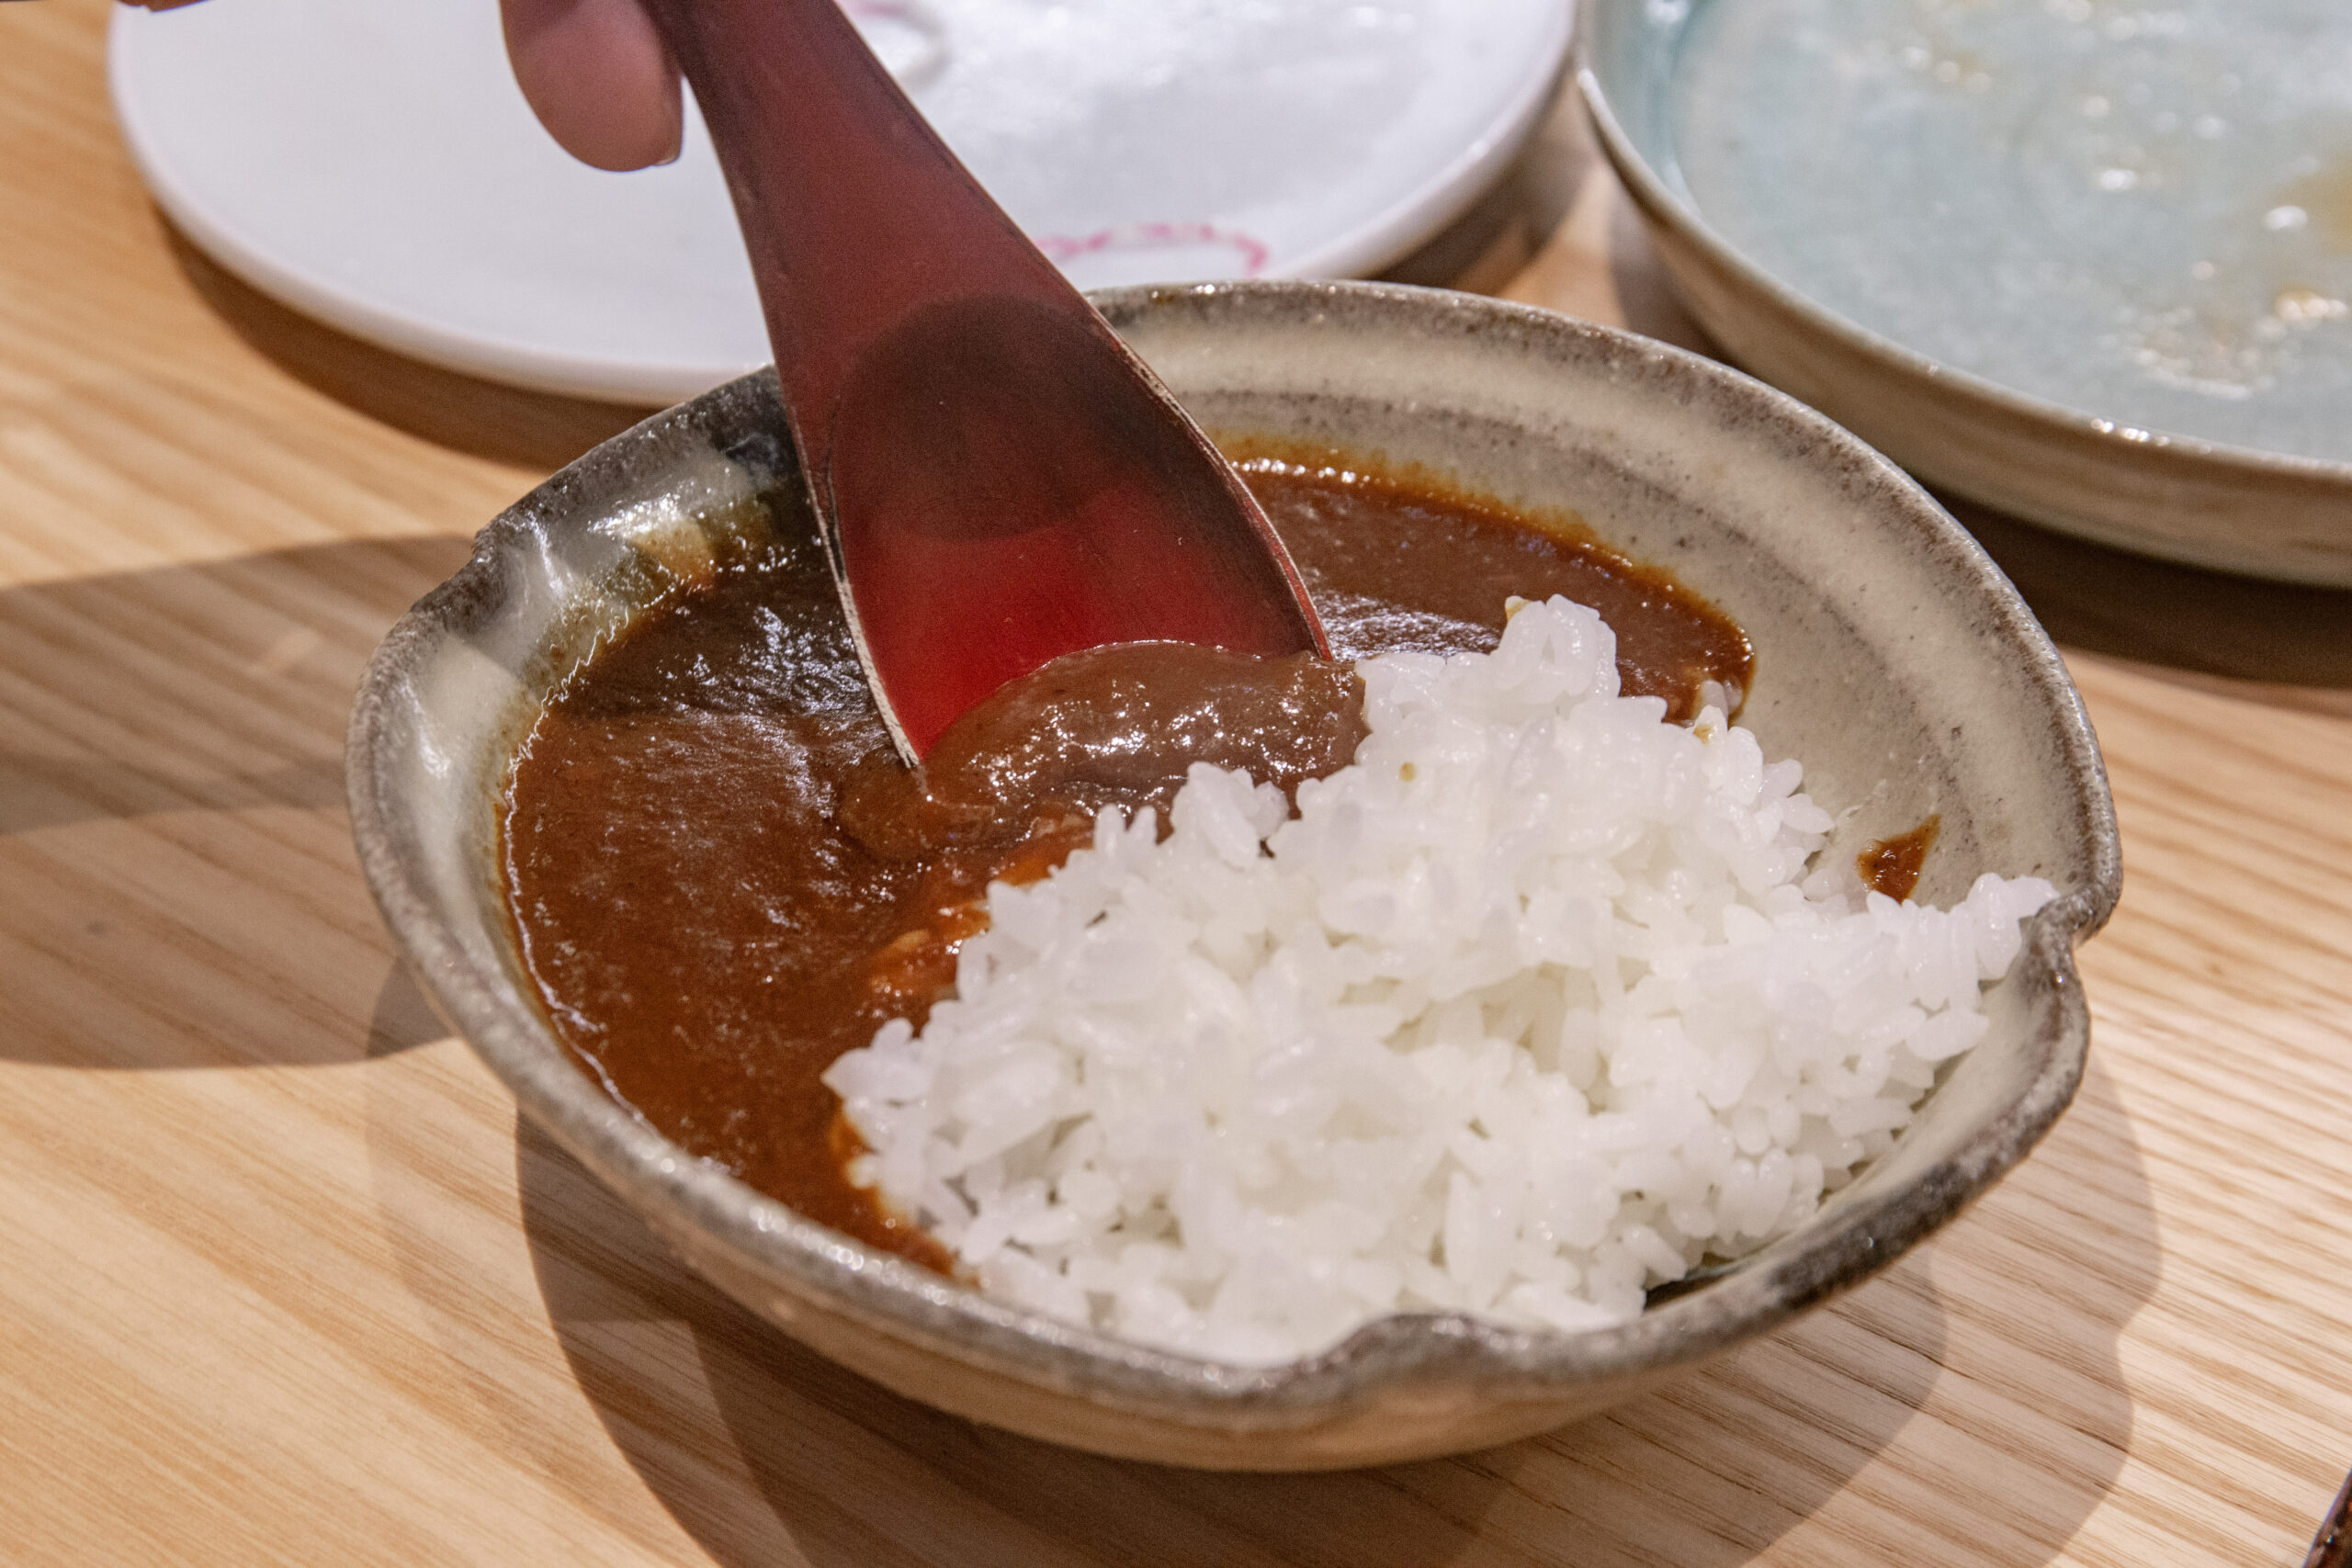 Toko Yakitori - Iwao Chef Curry small portion